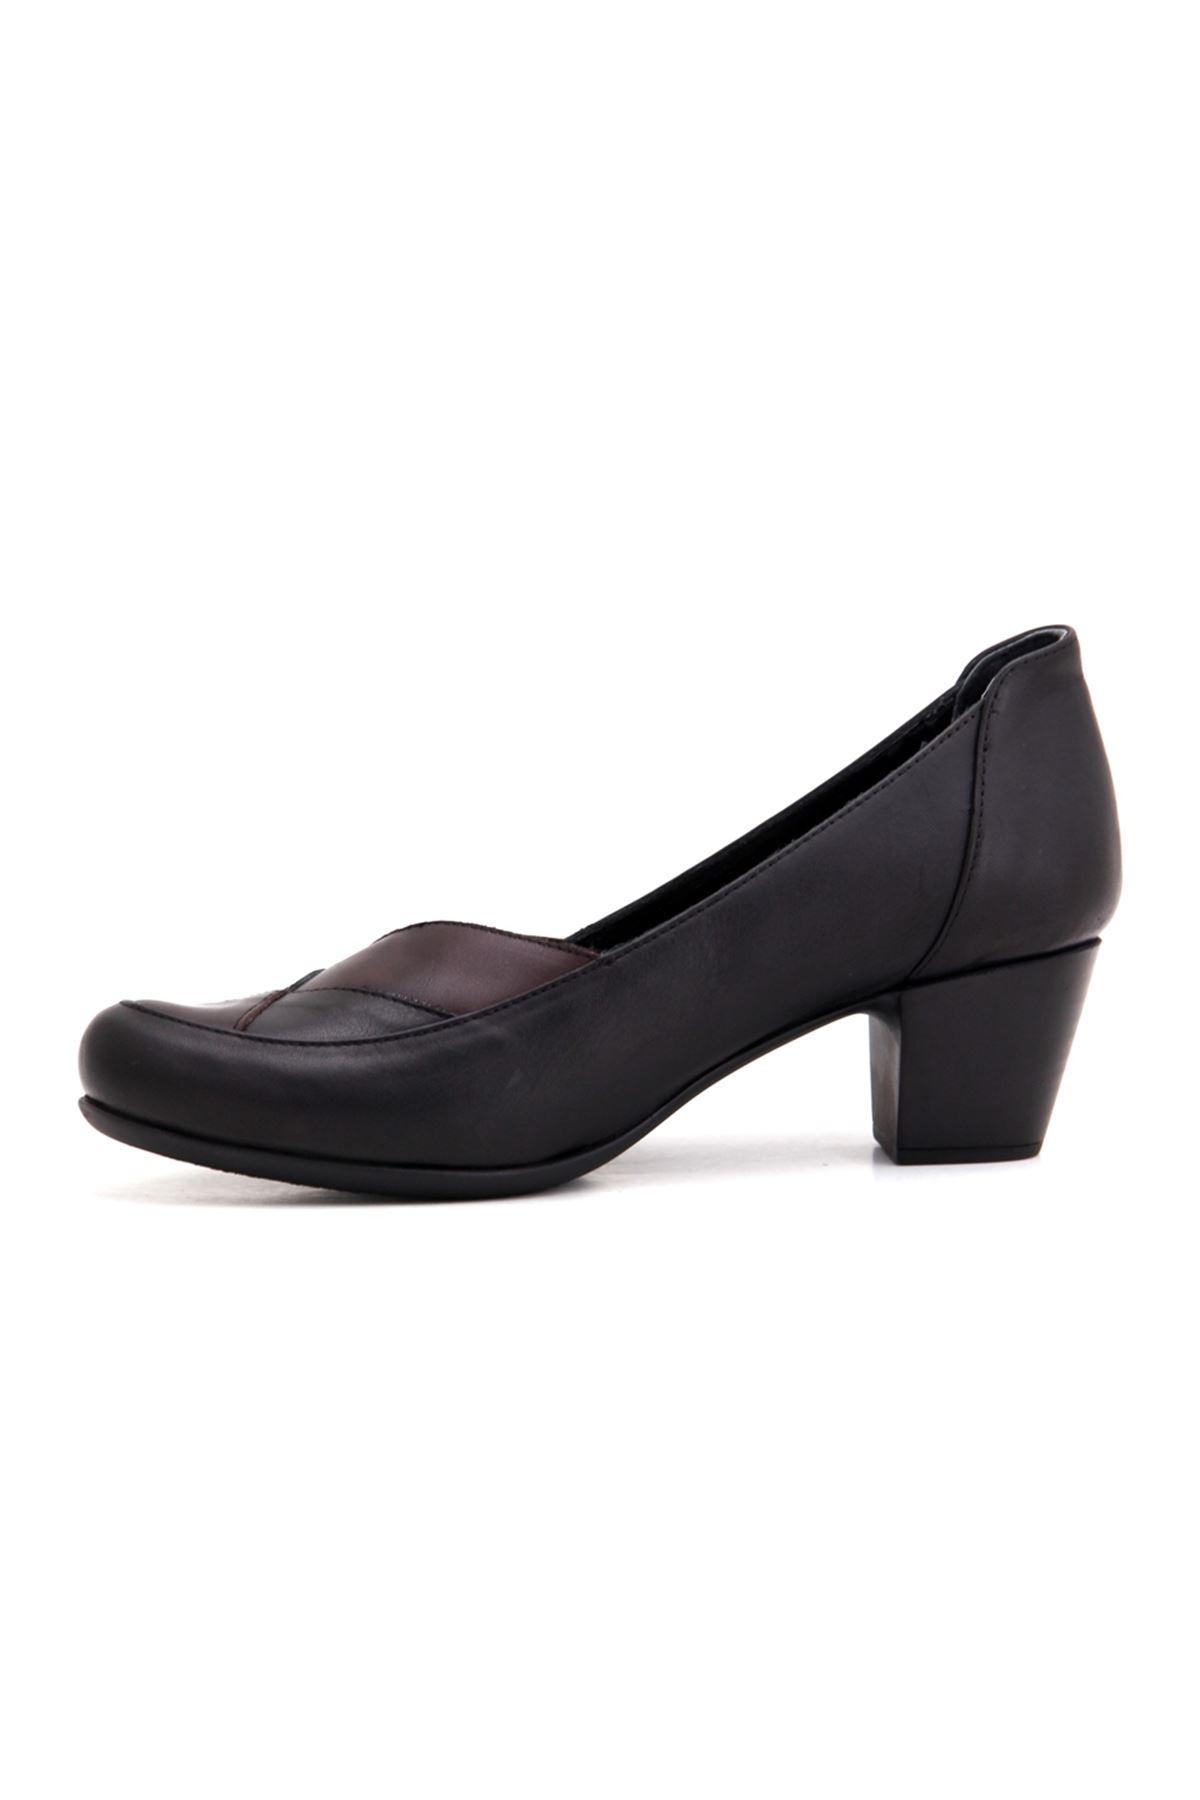 D20YA-3180 Mammamia Günlük Bayan Ayakkabı - Siyah